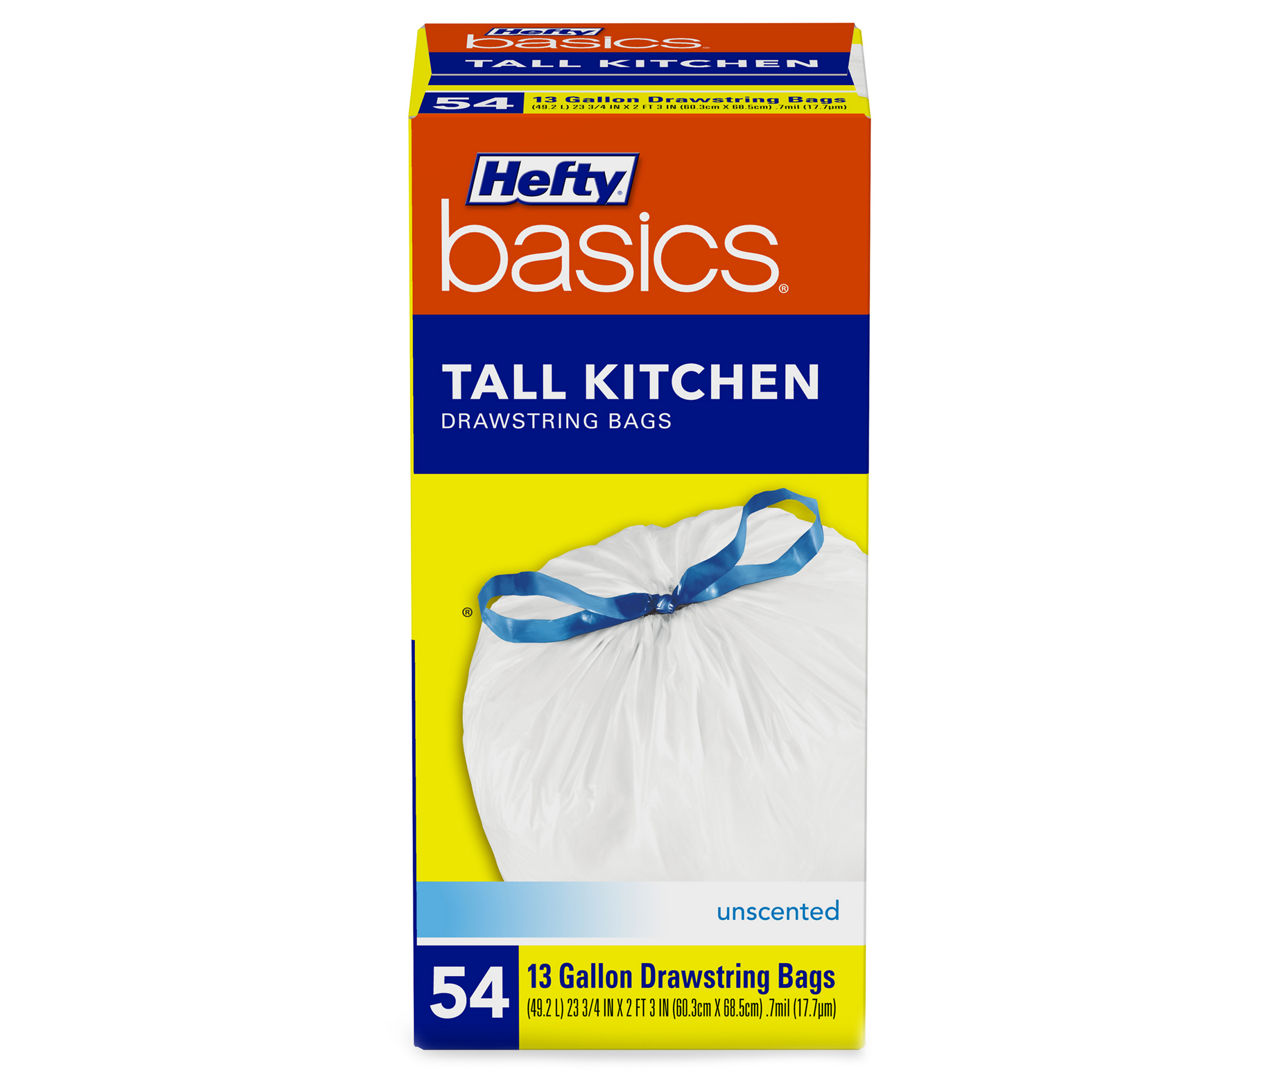 Hefty Basics 13 Gallon Drawstring Tall Kitchen Bags 54 Ct Box